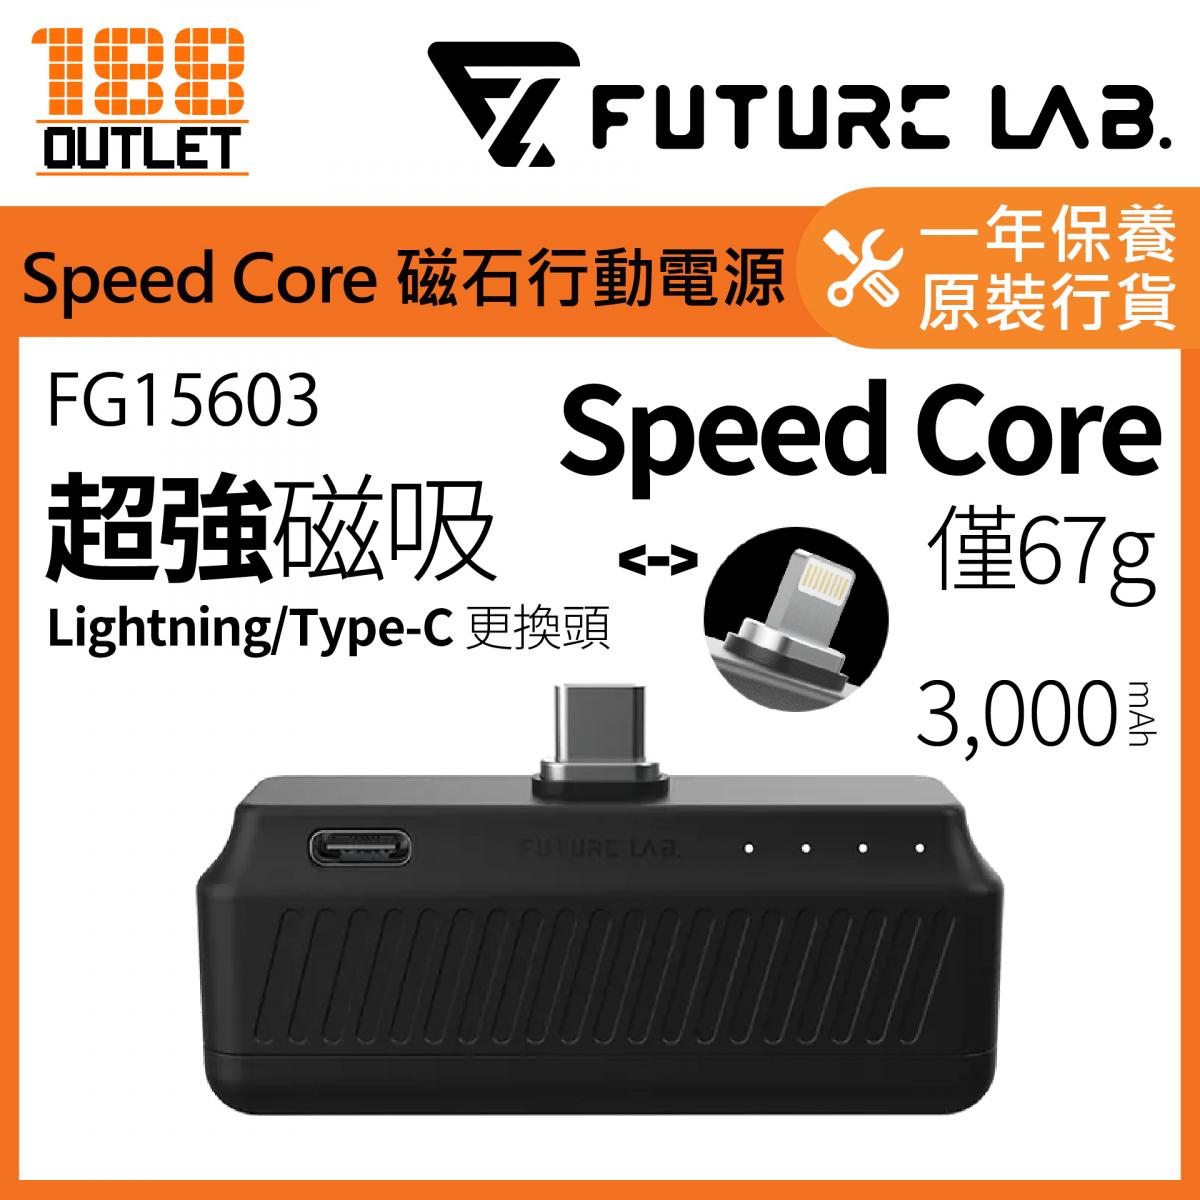 Speed Core Magnetic Power Bank(Lightning/Type-C) FG15603 [Authorized Goods]